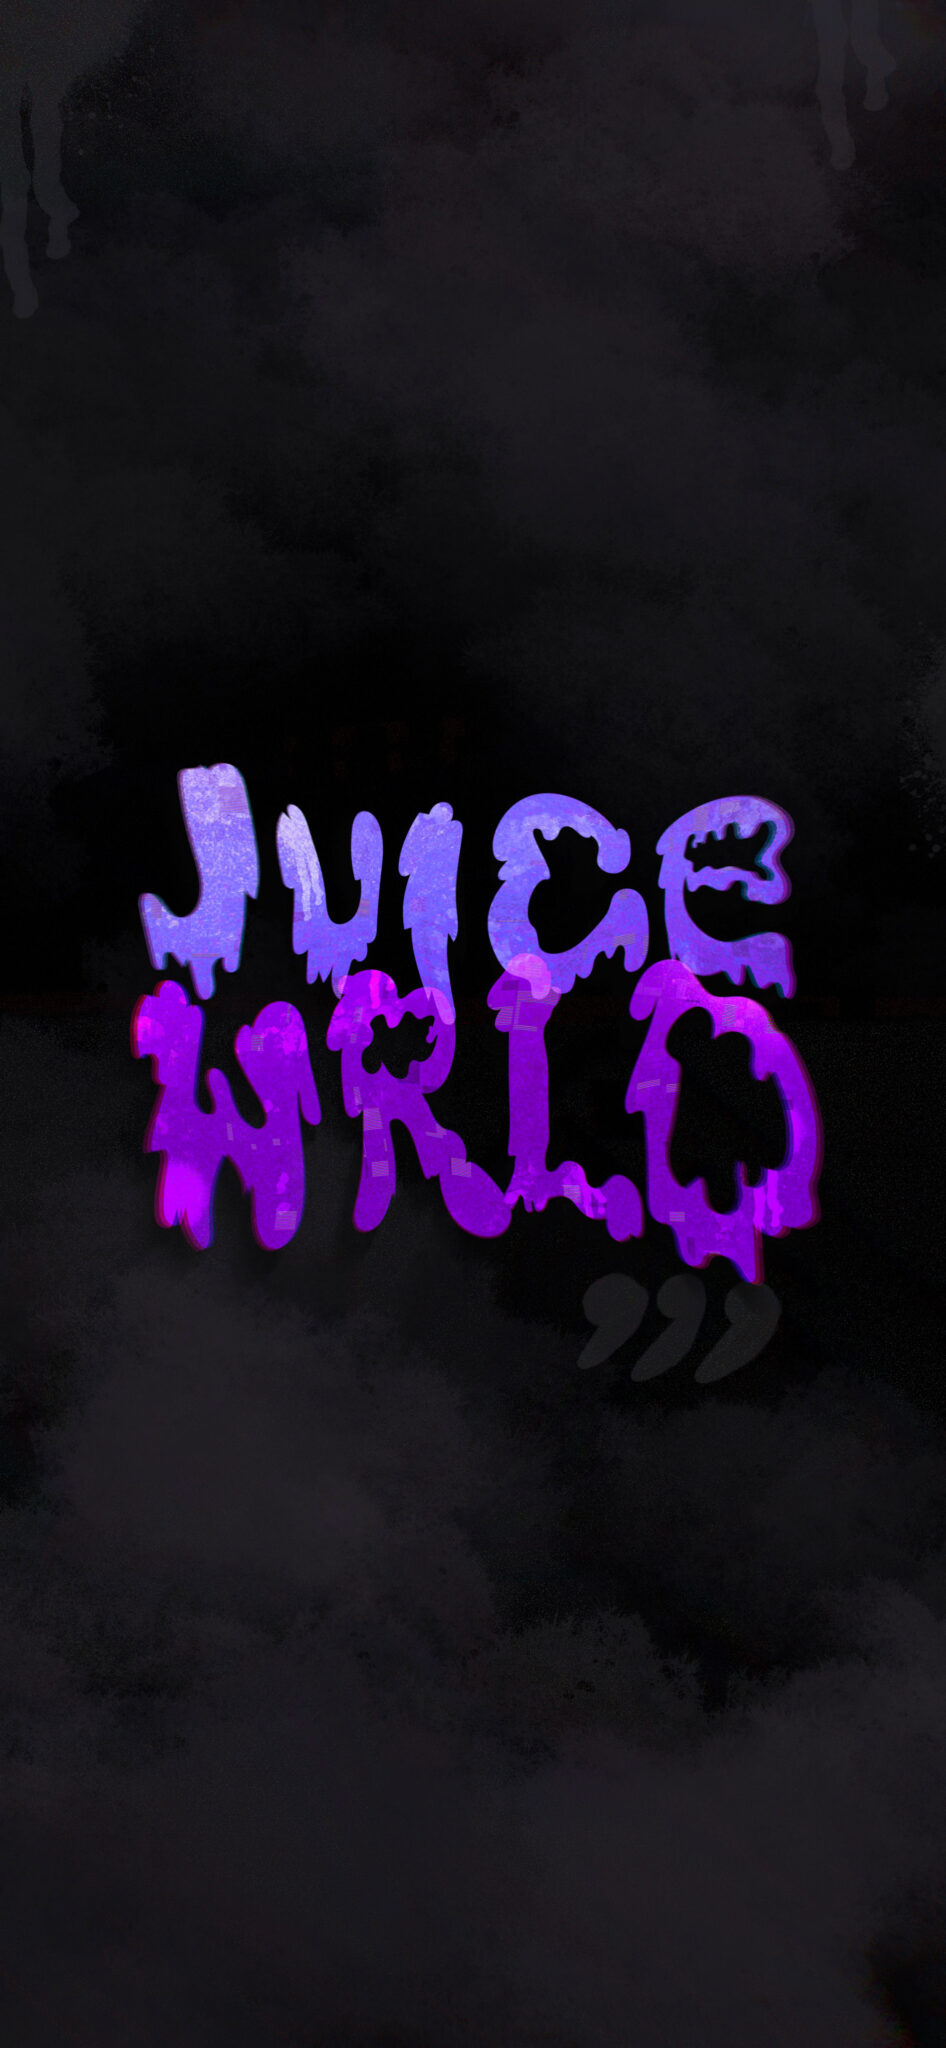 Juice WRLD Wallpaper on Black Background - Juice WRLD Background